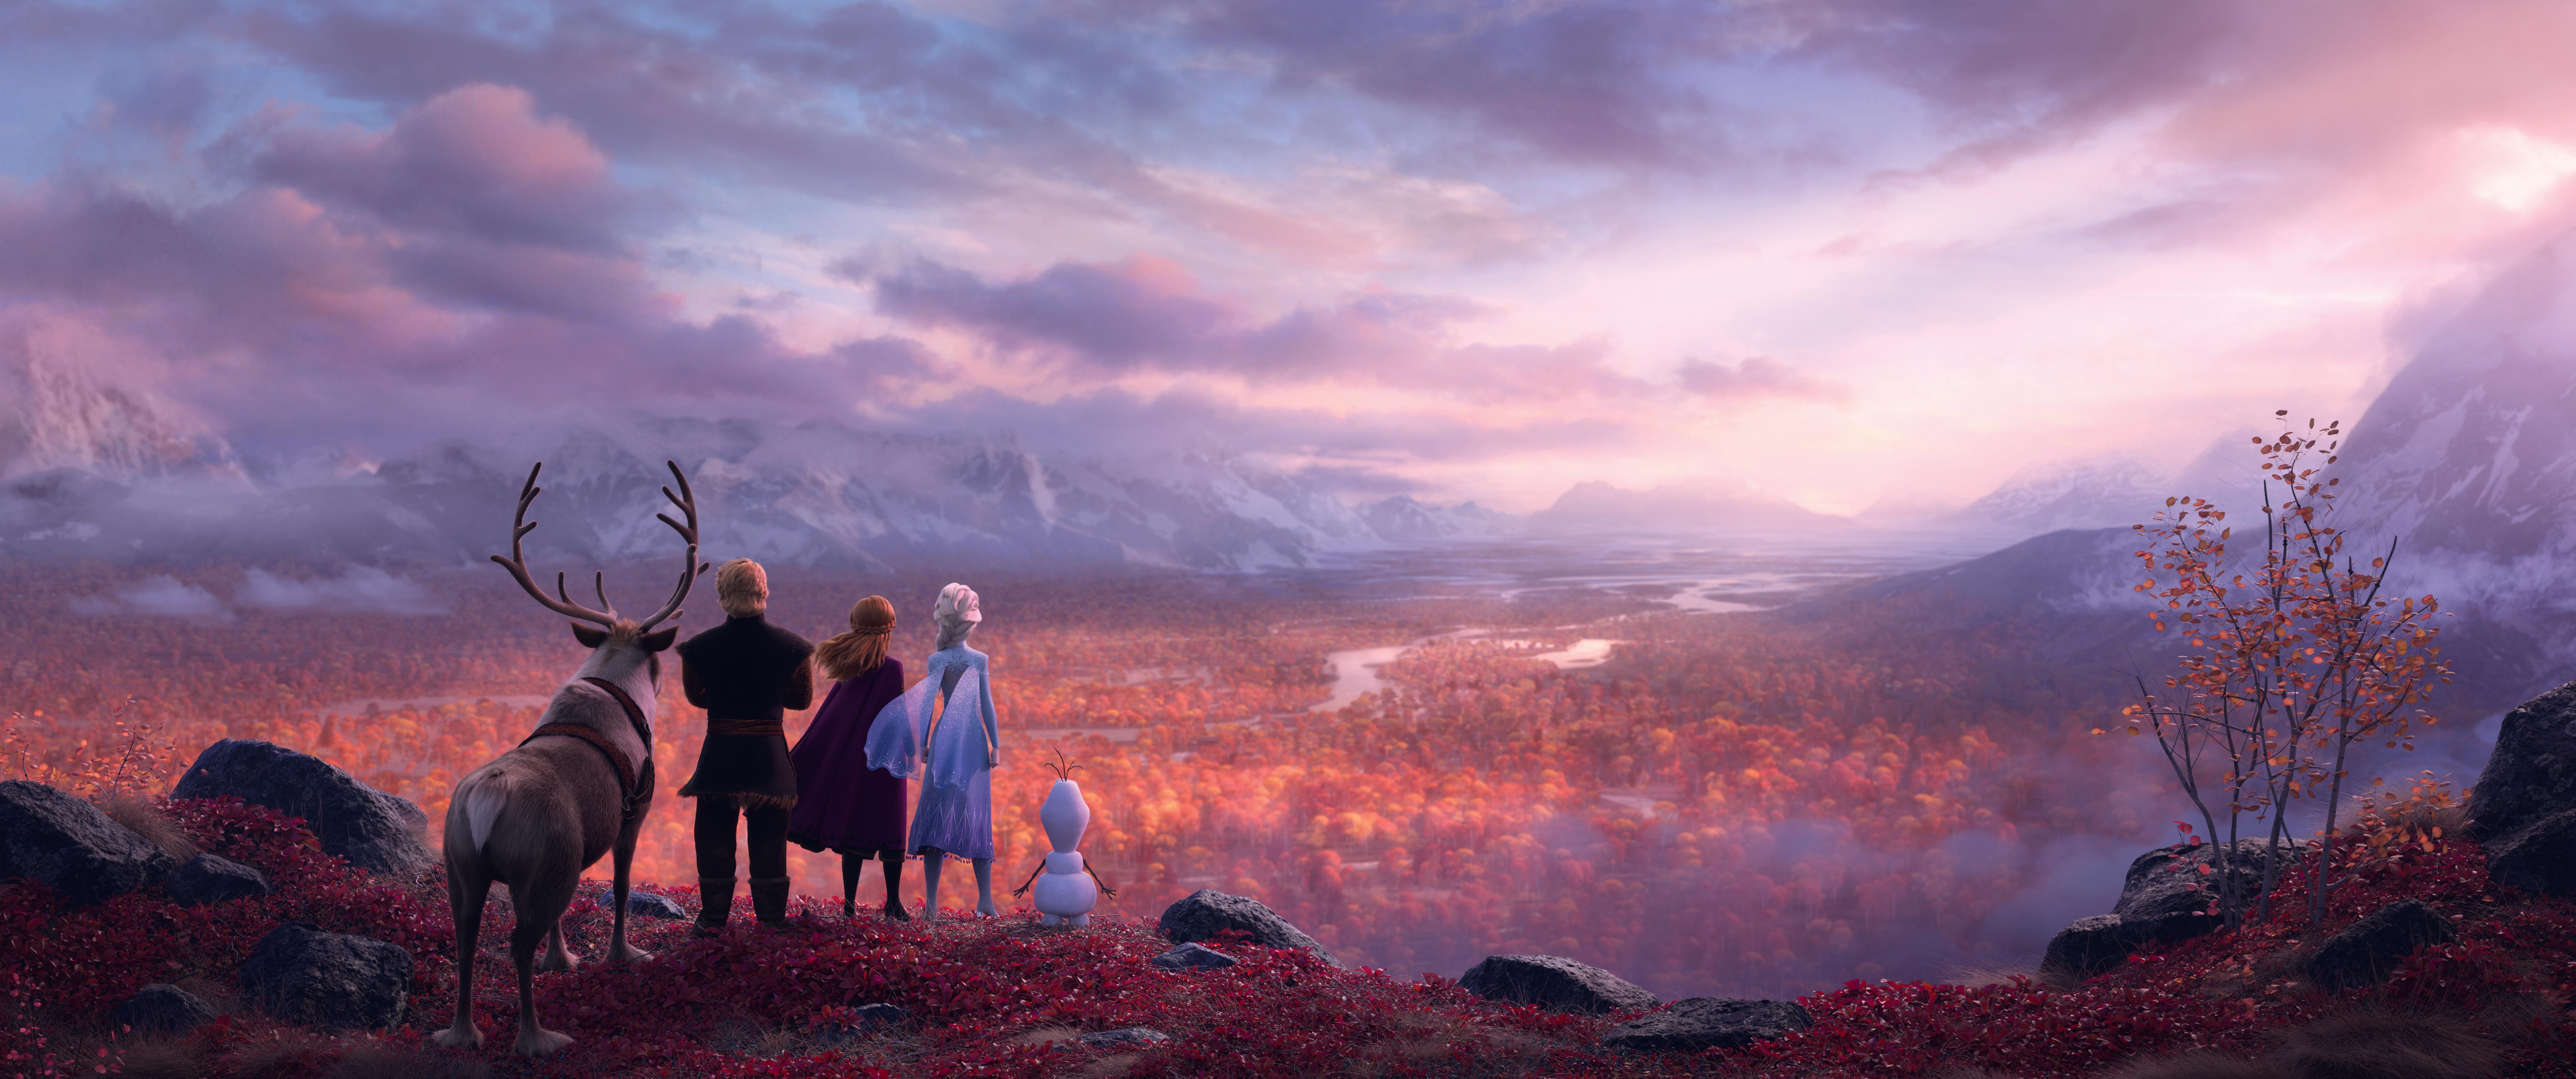 Frozen 2 2019 5k, HD Movies, 4k Wallpaper, Image, Background